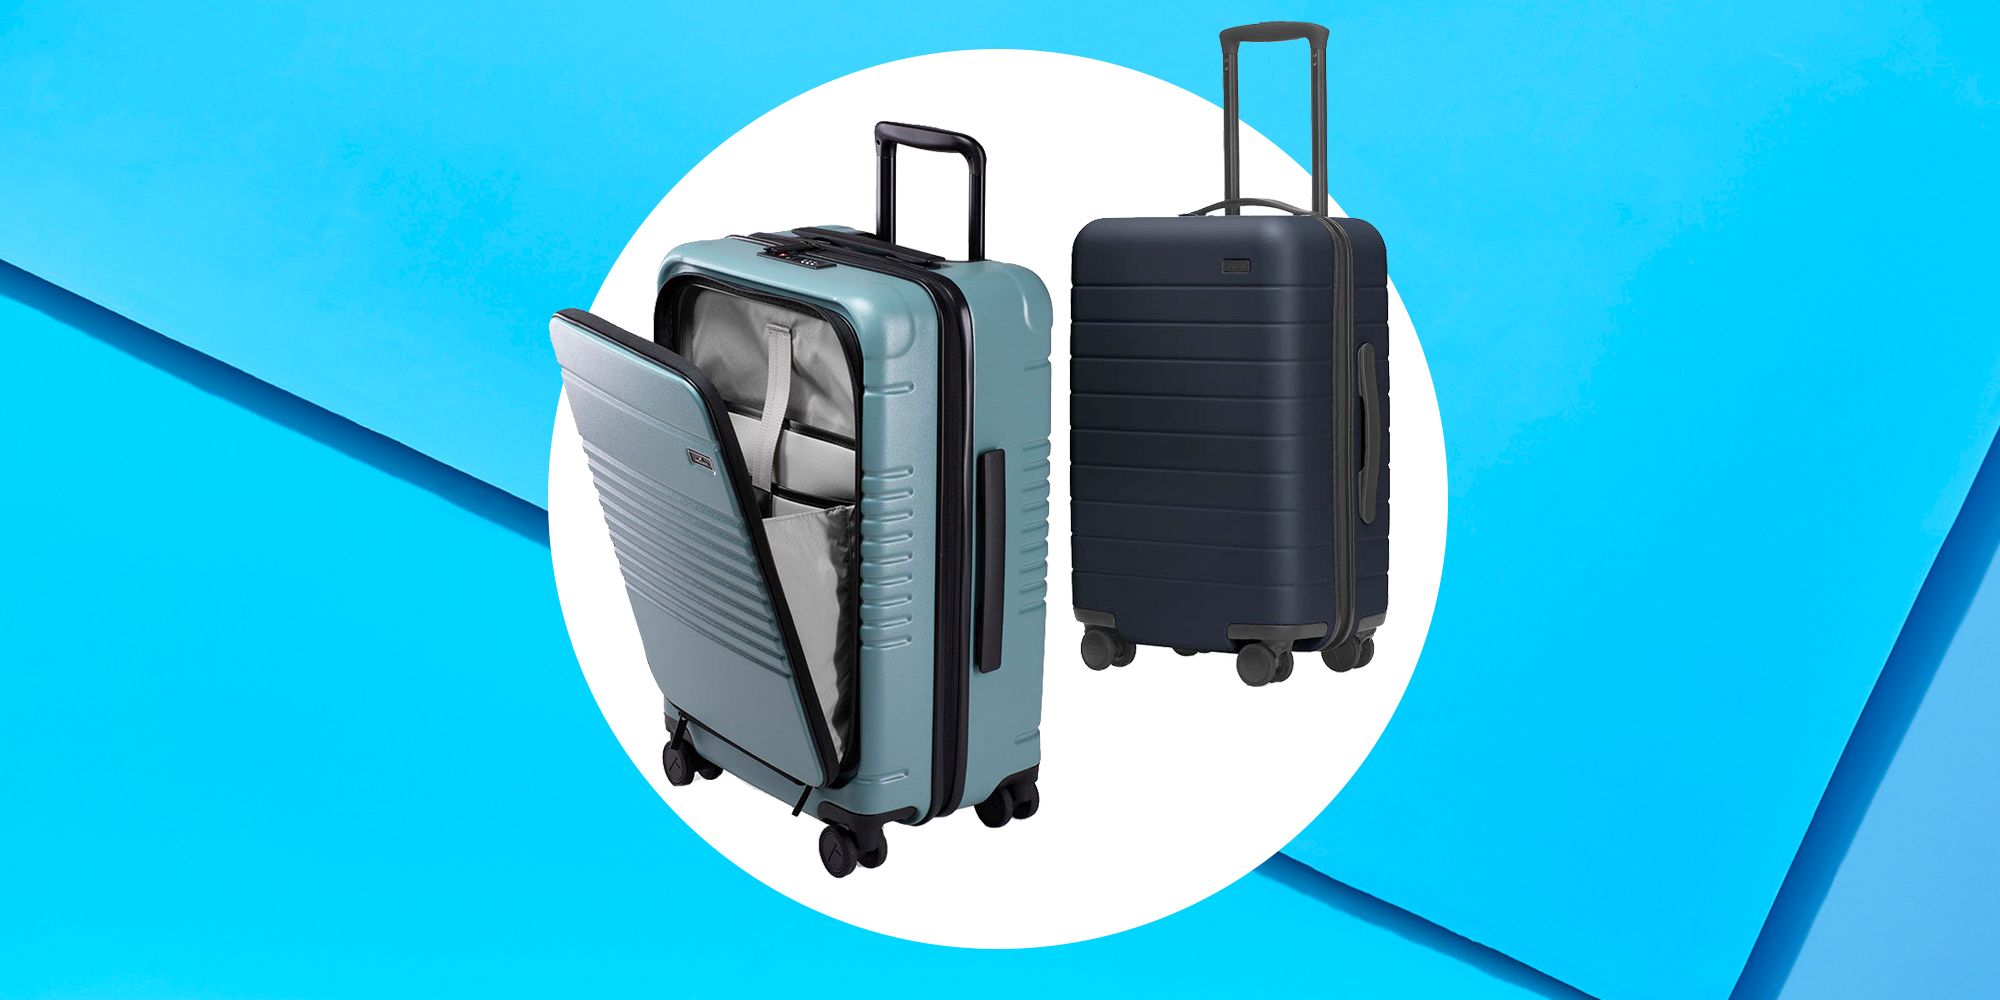 Tote&Carry - Blue Apollo 2 Crocodile Skin Luggage Set, 3 Piece Luggage Sets Backpack Duffle Bag